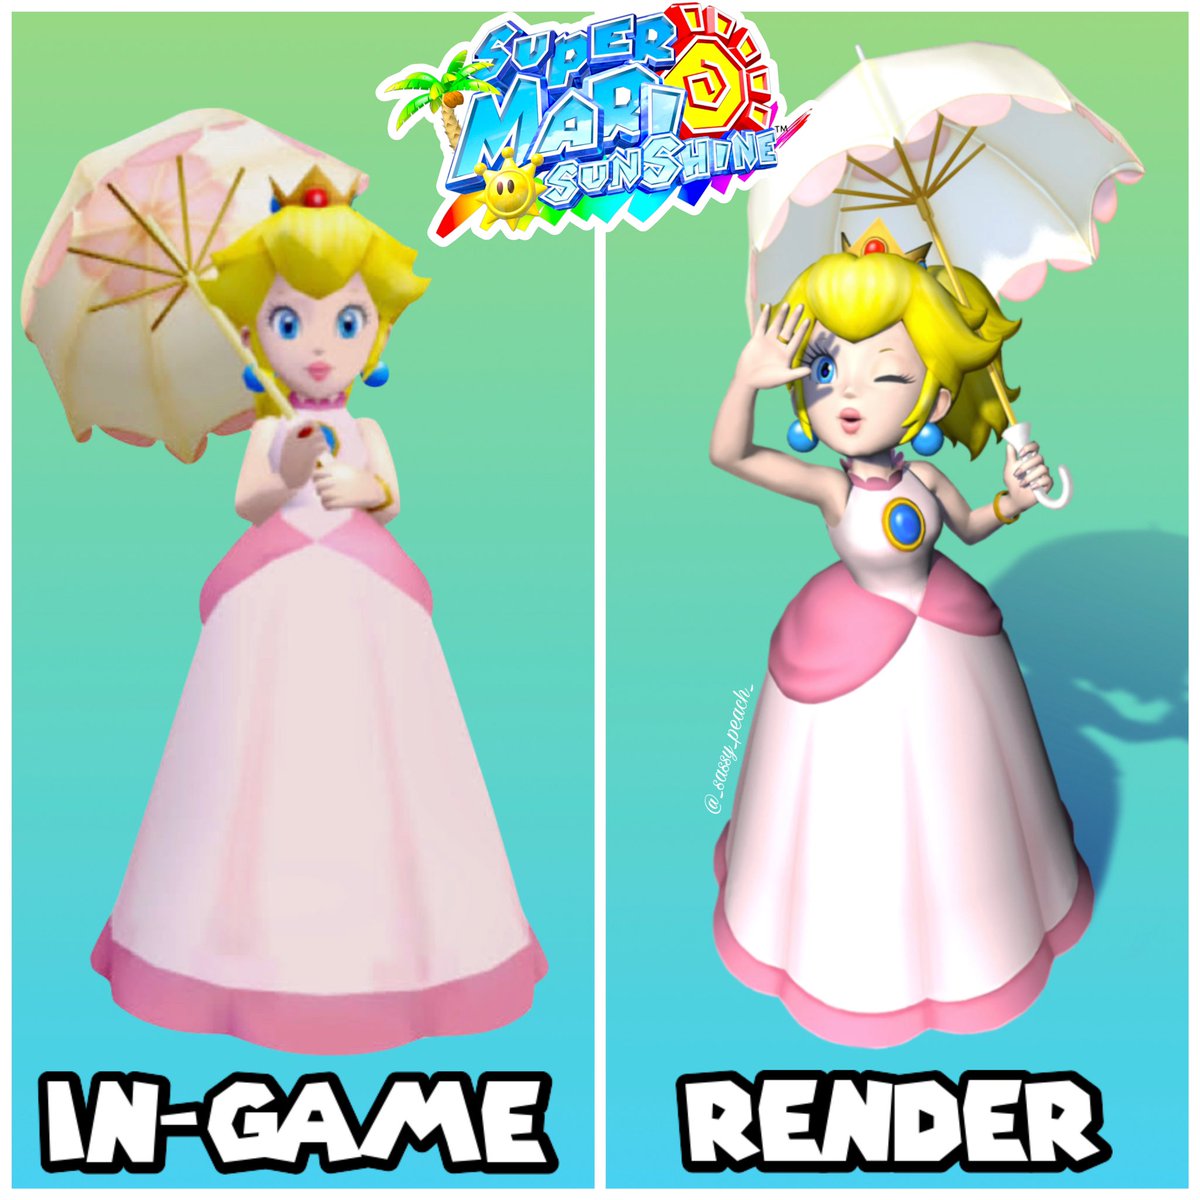 Peach’s ingame design vs her render design in supermario sunshine. 

#peach #princesspeach
#superprincesspeach 
#supermariosunshine #supermario
#Nintendo #princesspeach🍑 #princesspeach👑